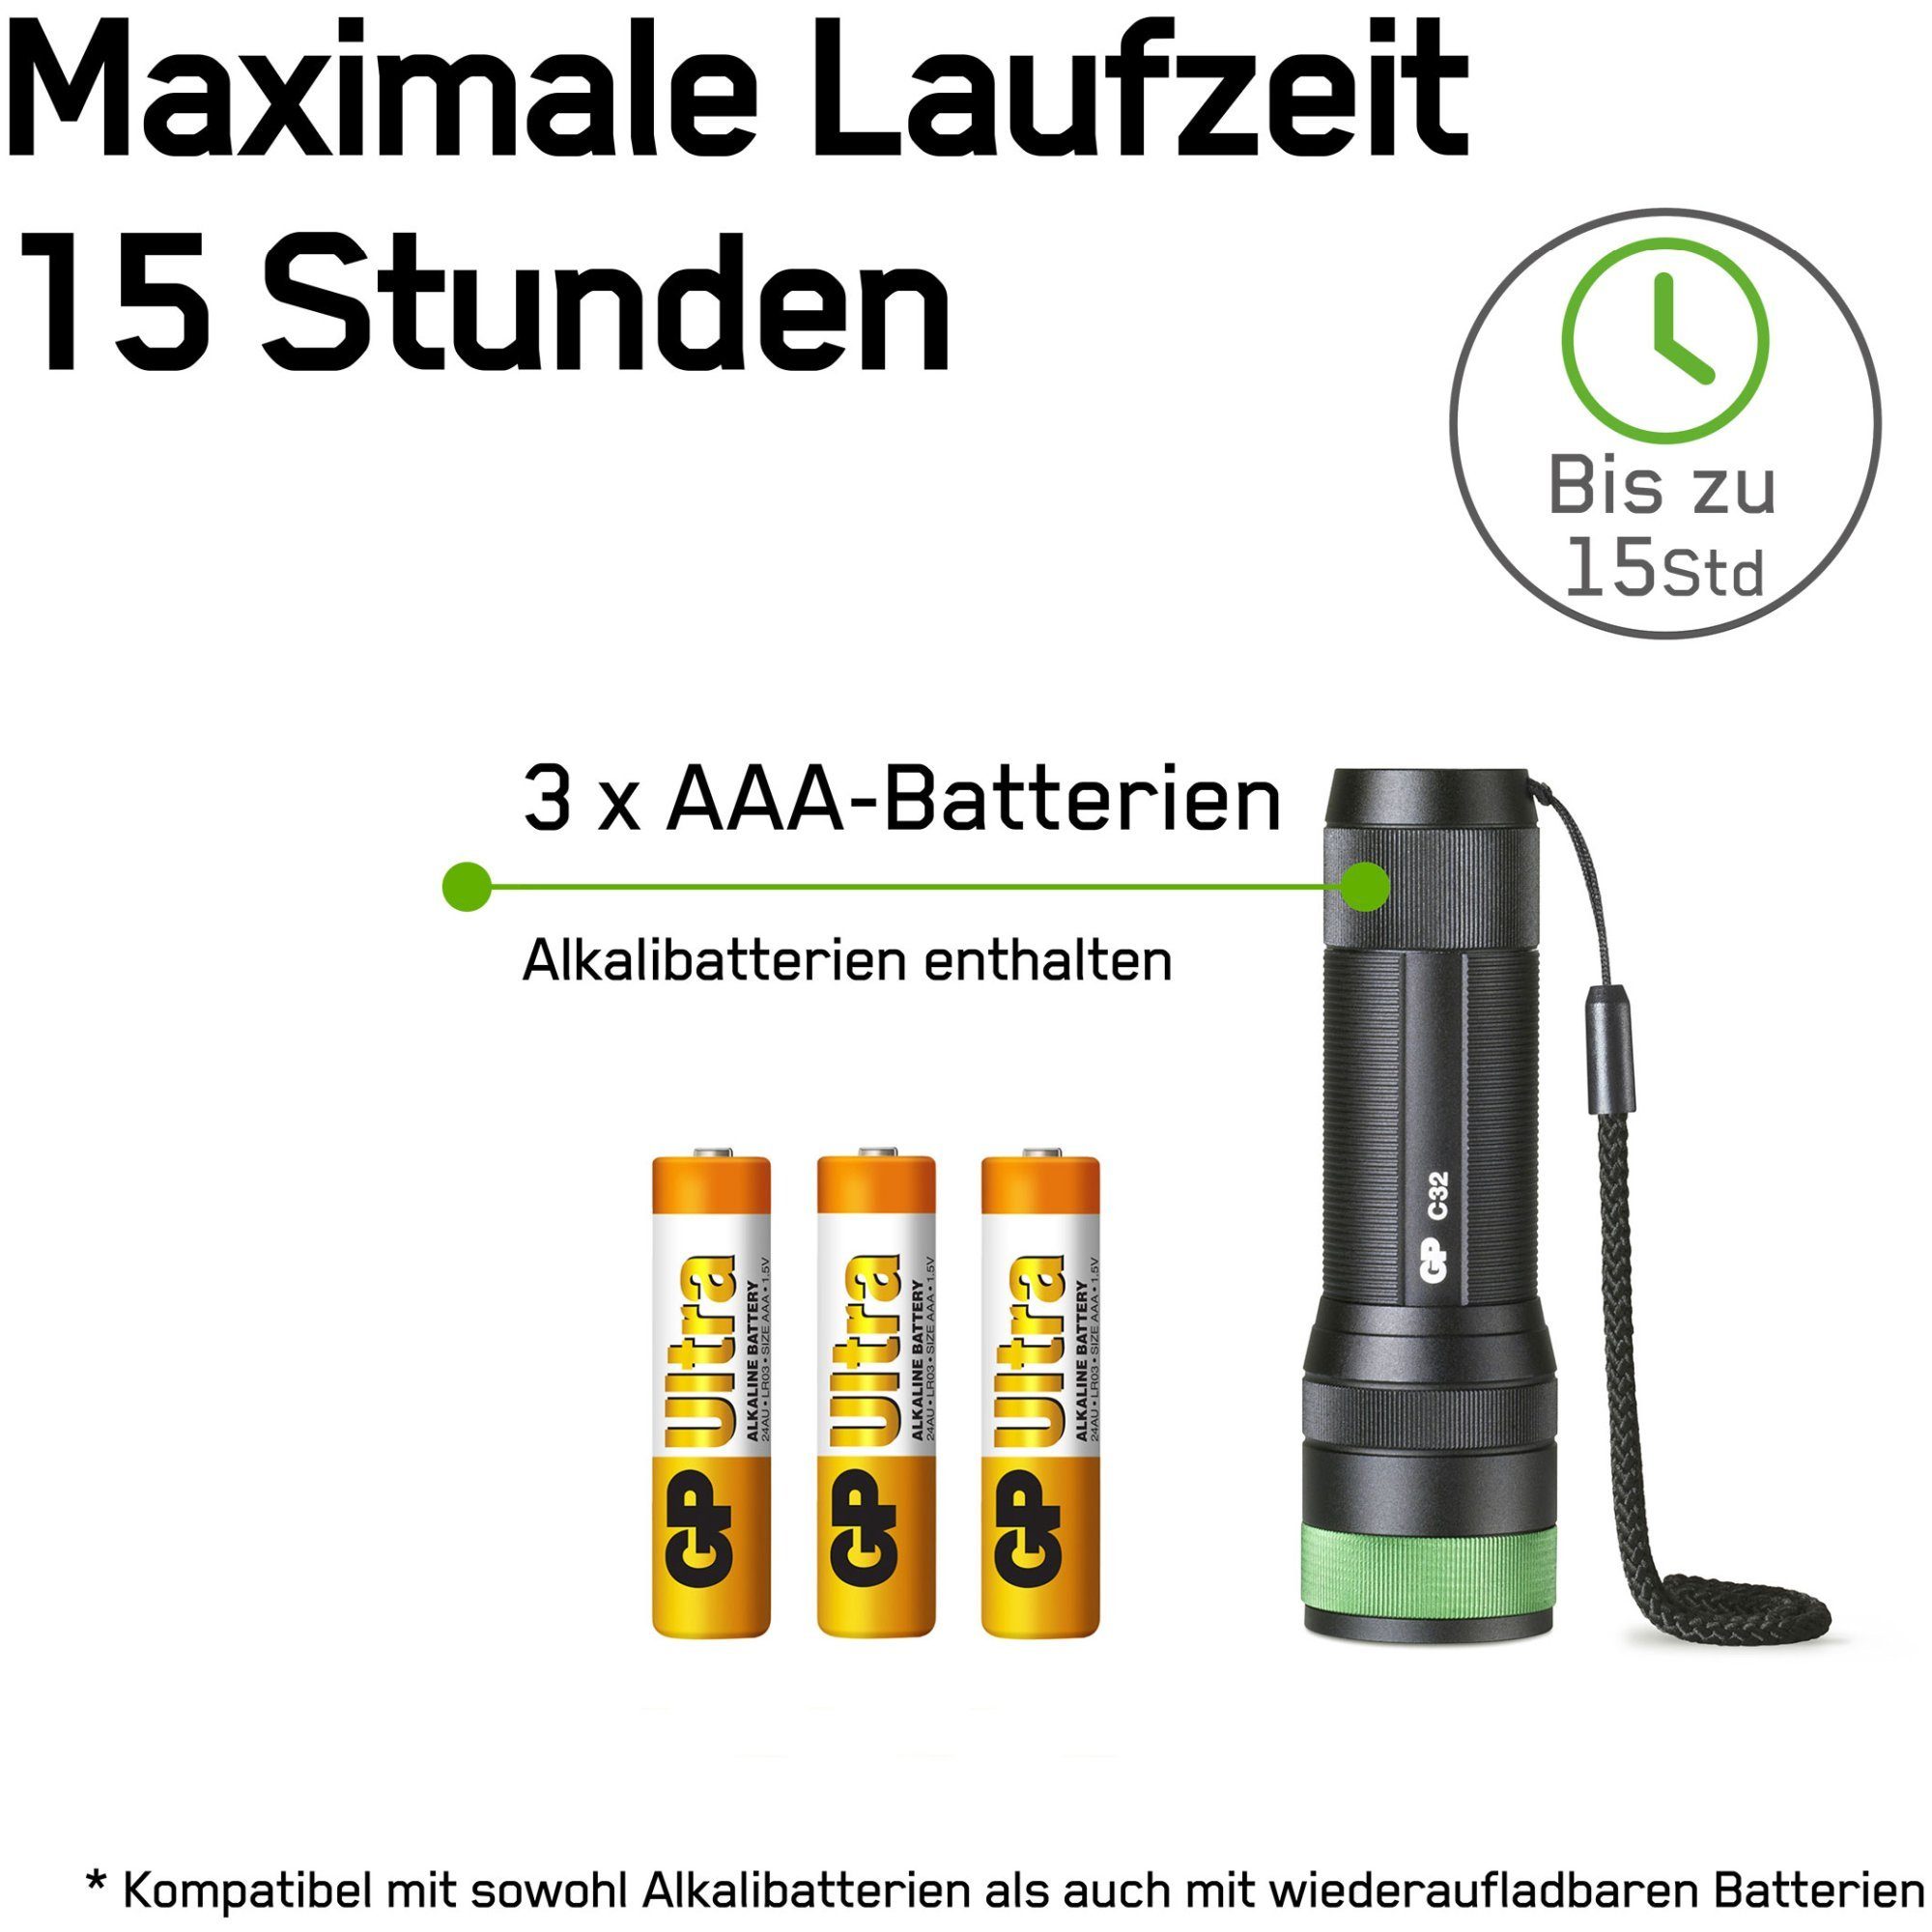 3x Batterien AAA 1,5V GP 300lumen inkl. C32 GP LED Taschenlampe Batteries Taschenlampe